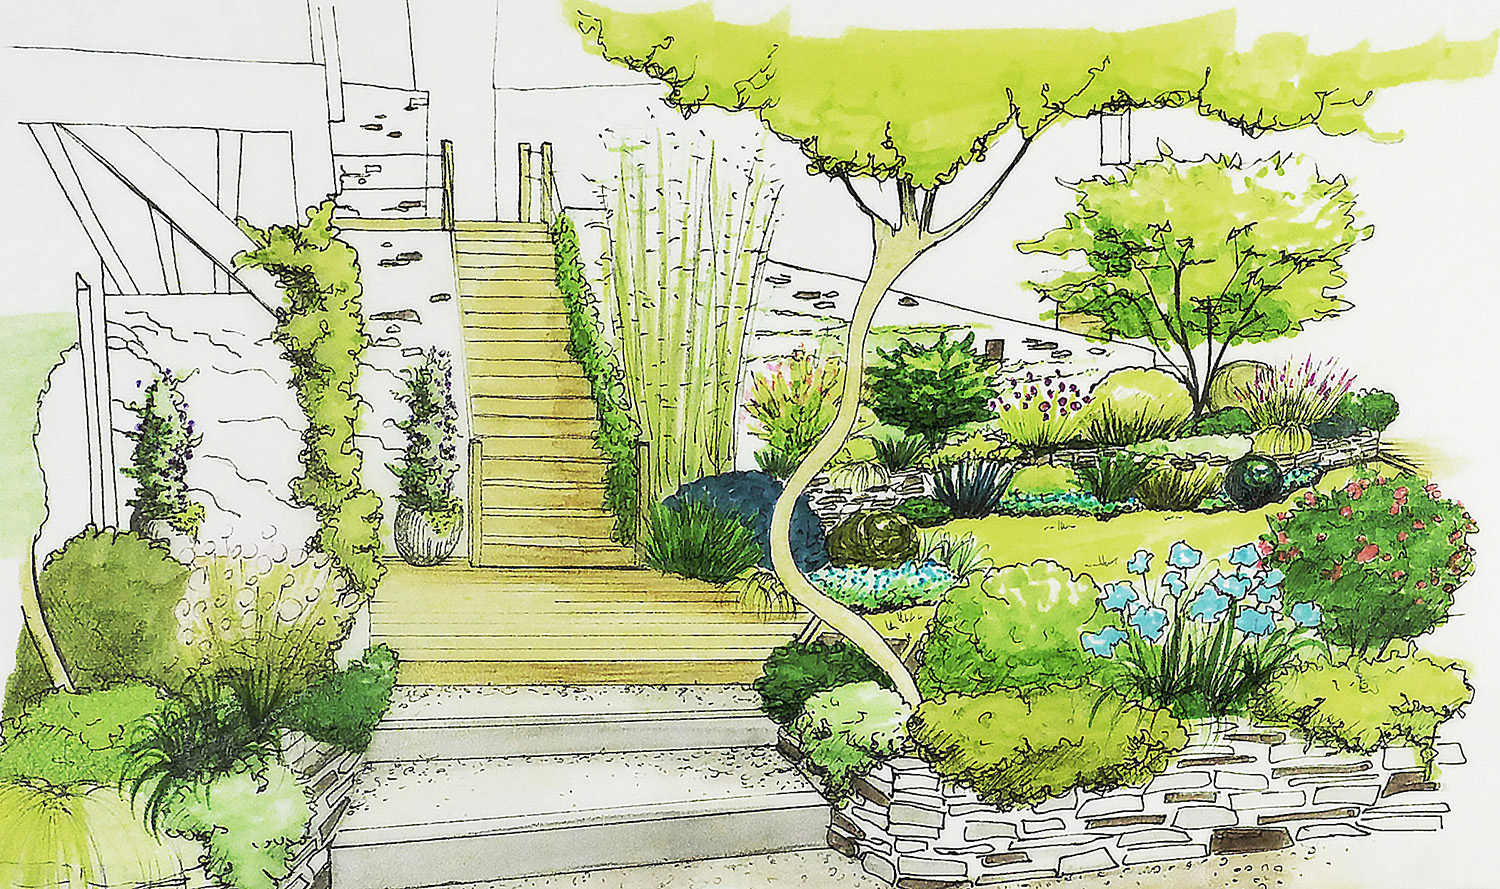 Illustration escalier de jardin et terrasse en bois